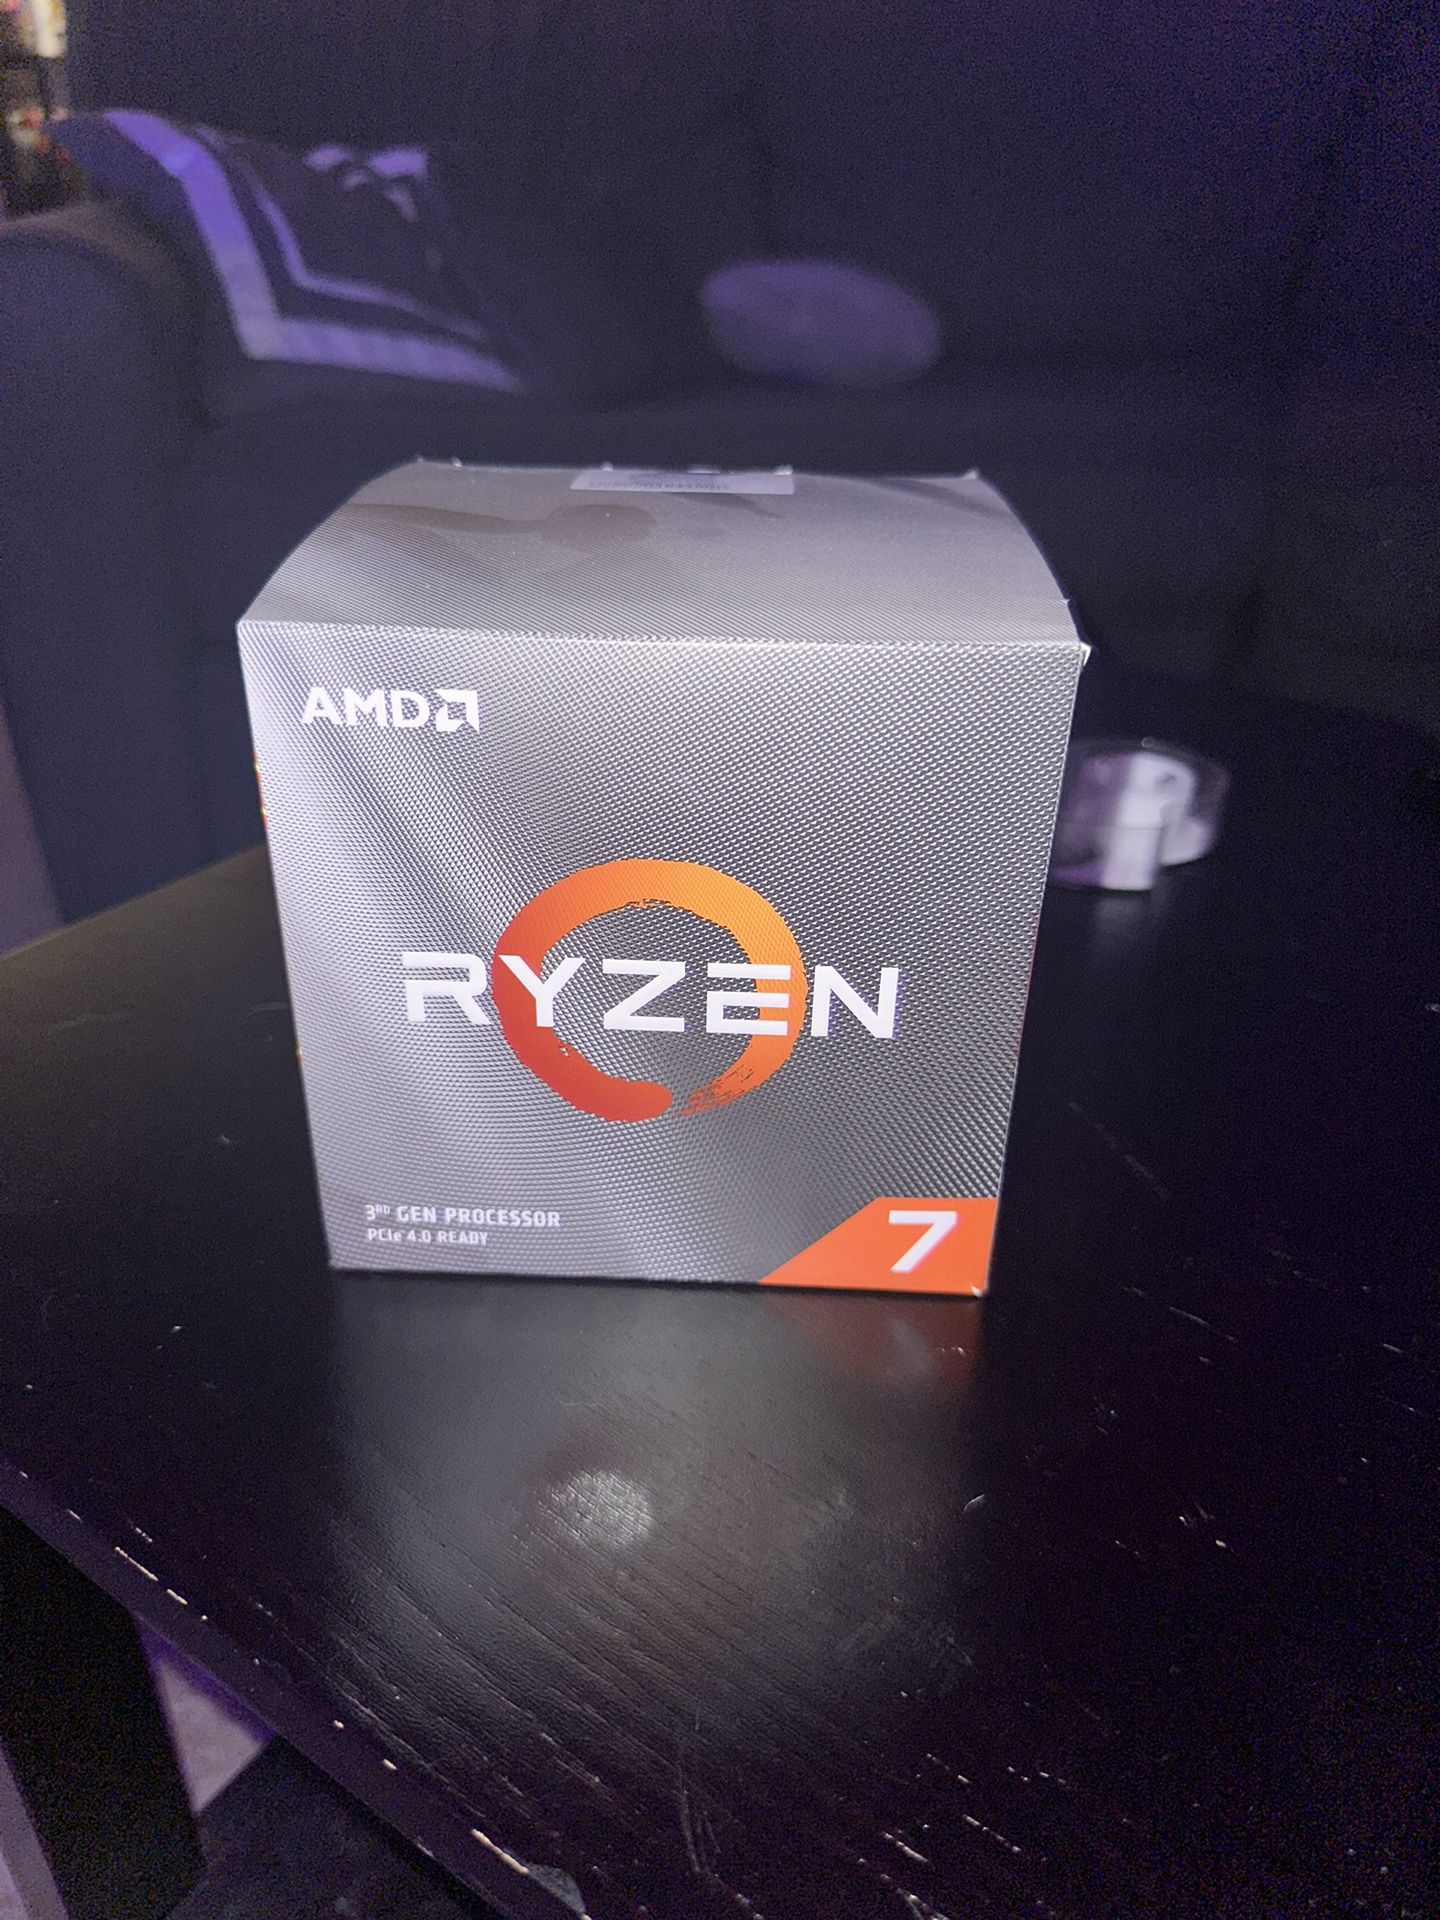 Ryzen 7 3700x 8-Core Thread Unlocked Desktop Processor